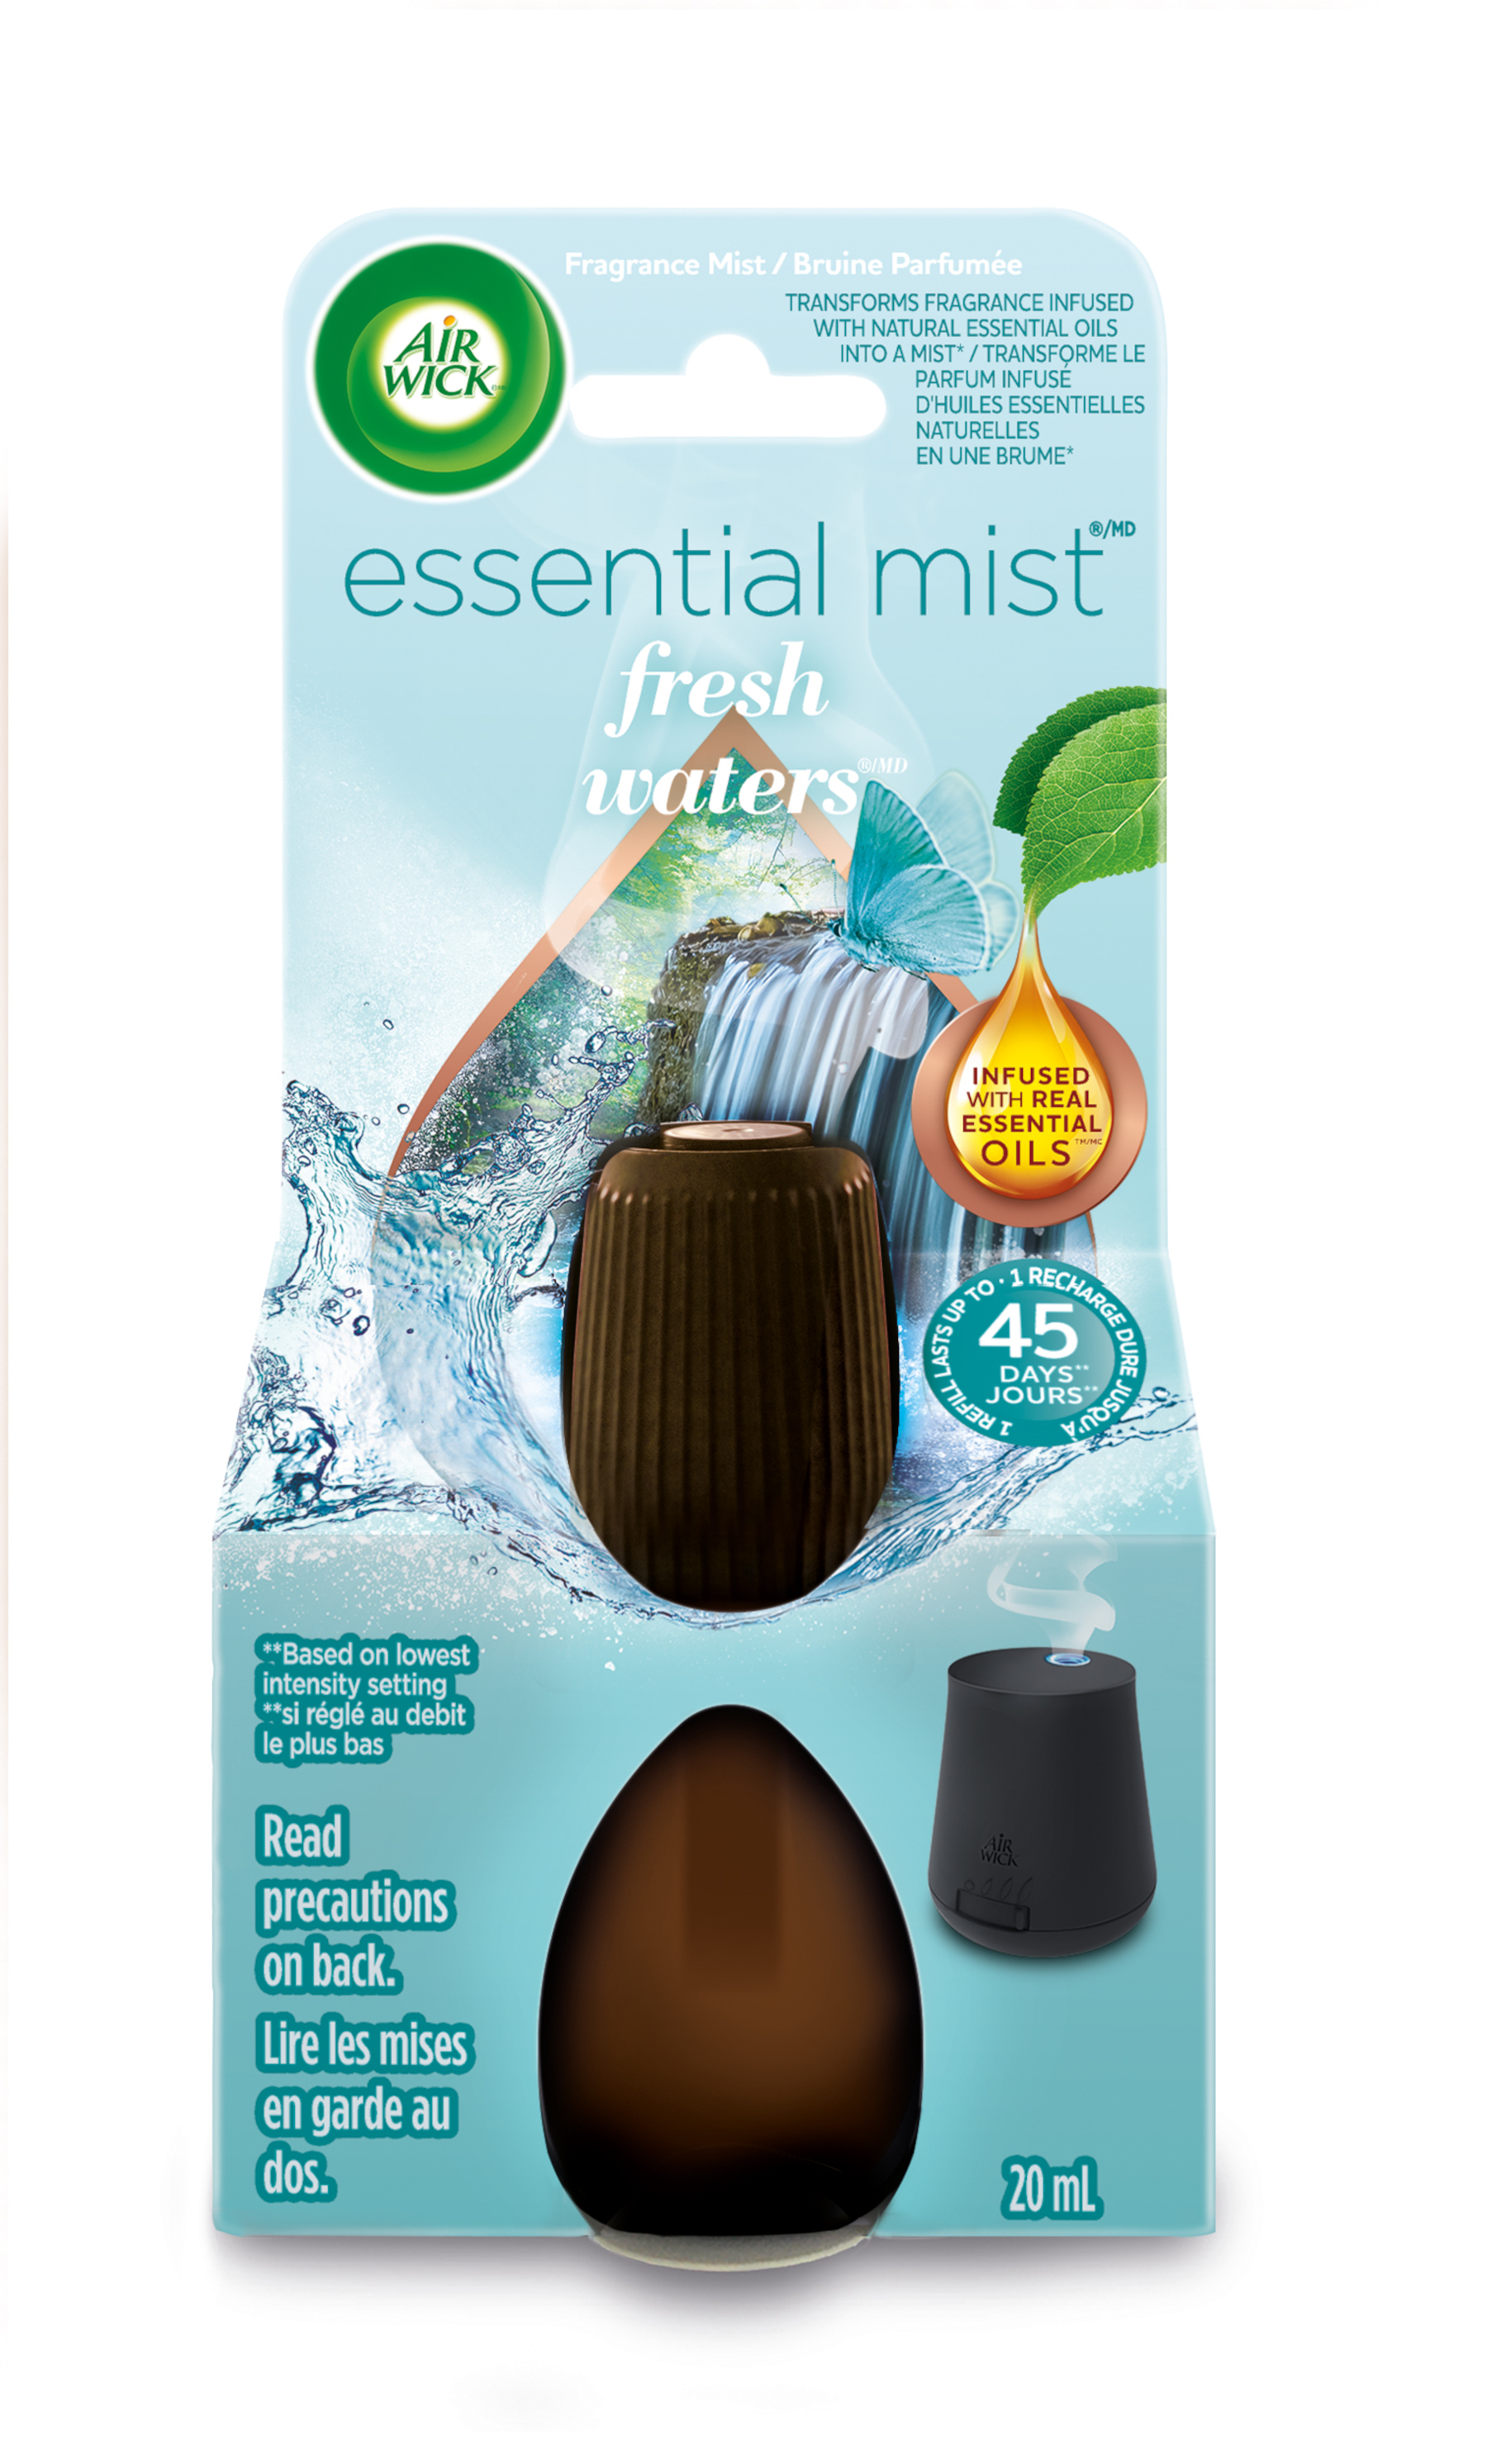 Air Wick Essential Mist Essential Oil Refill Fresh Waters